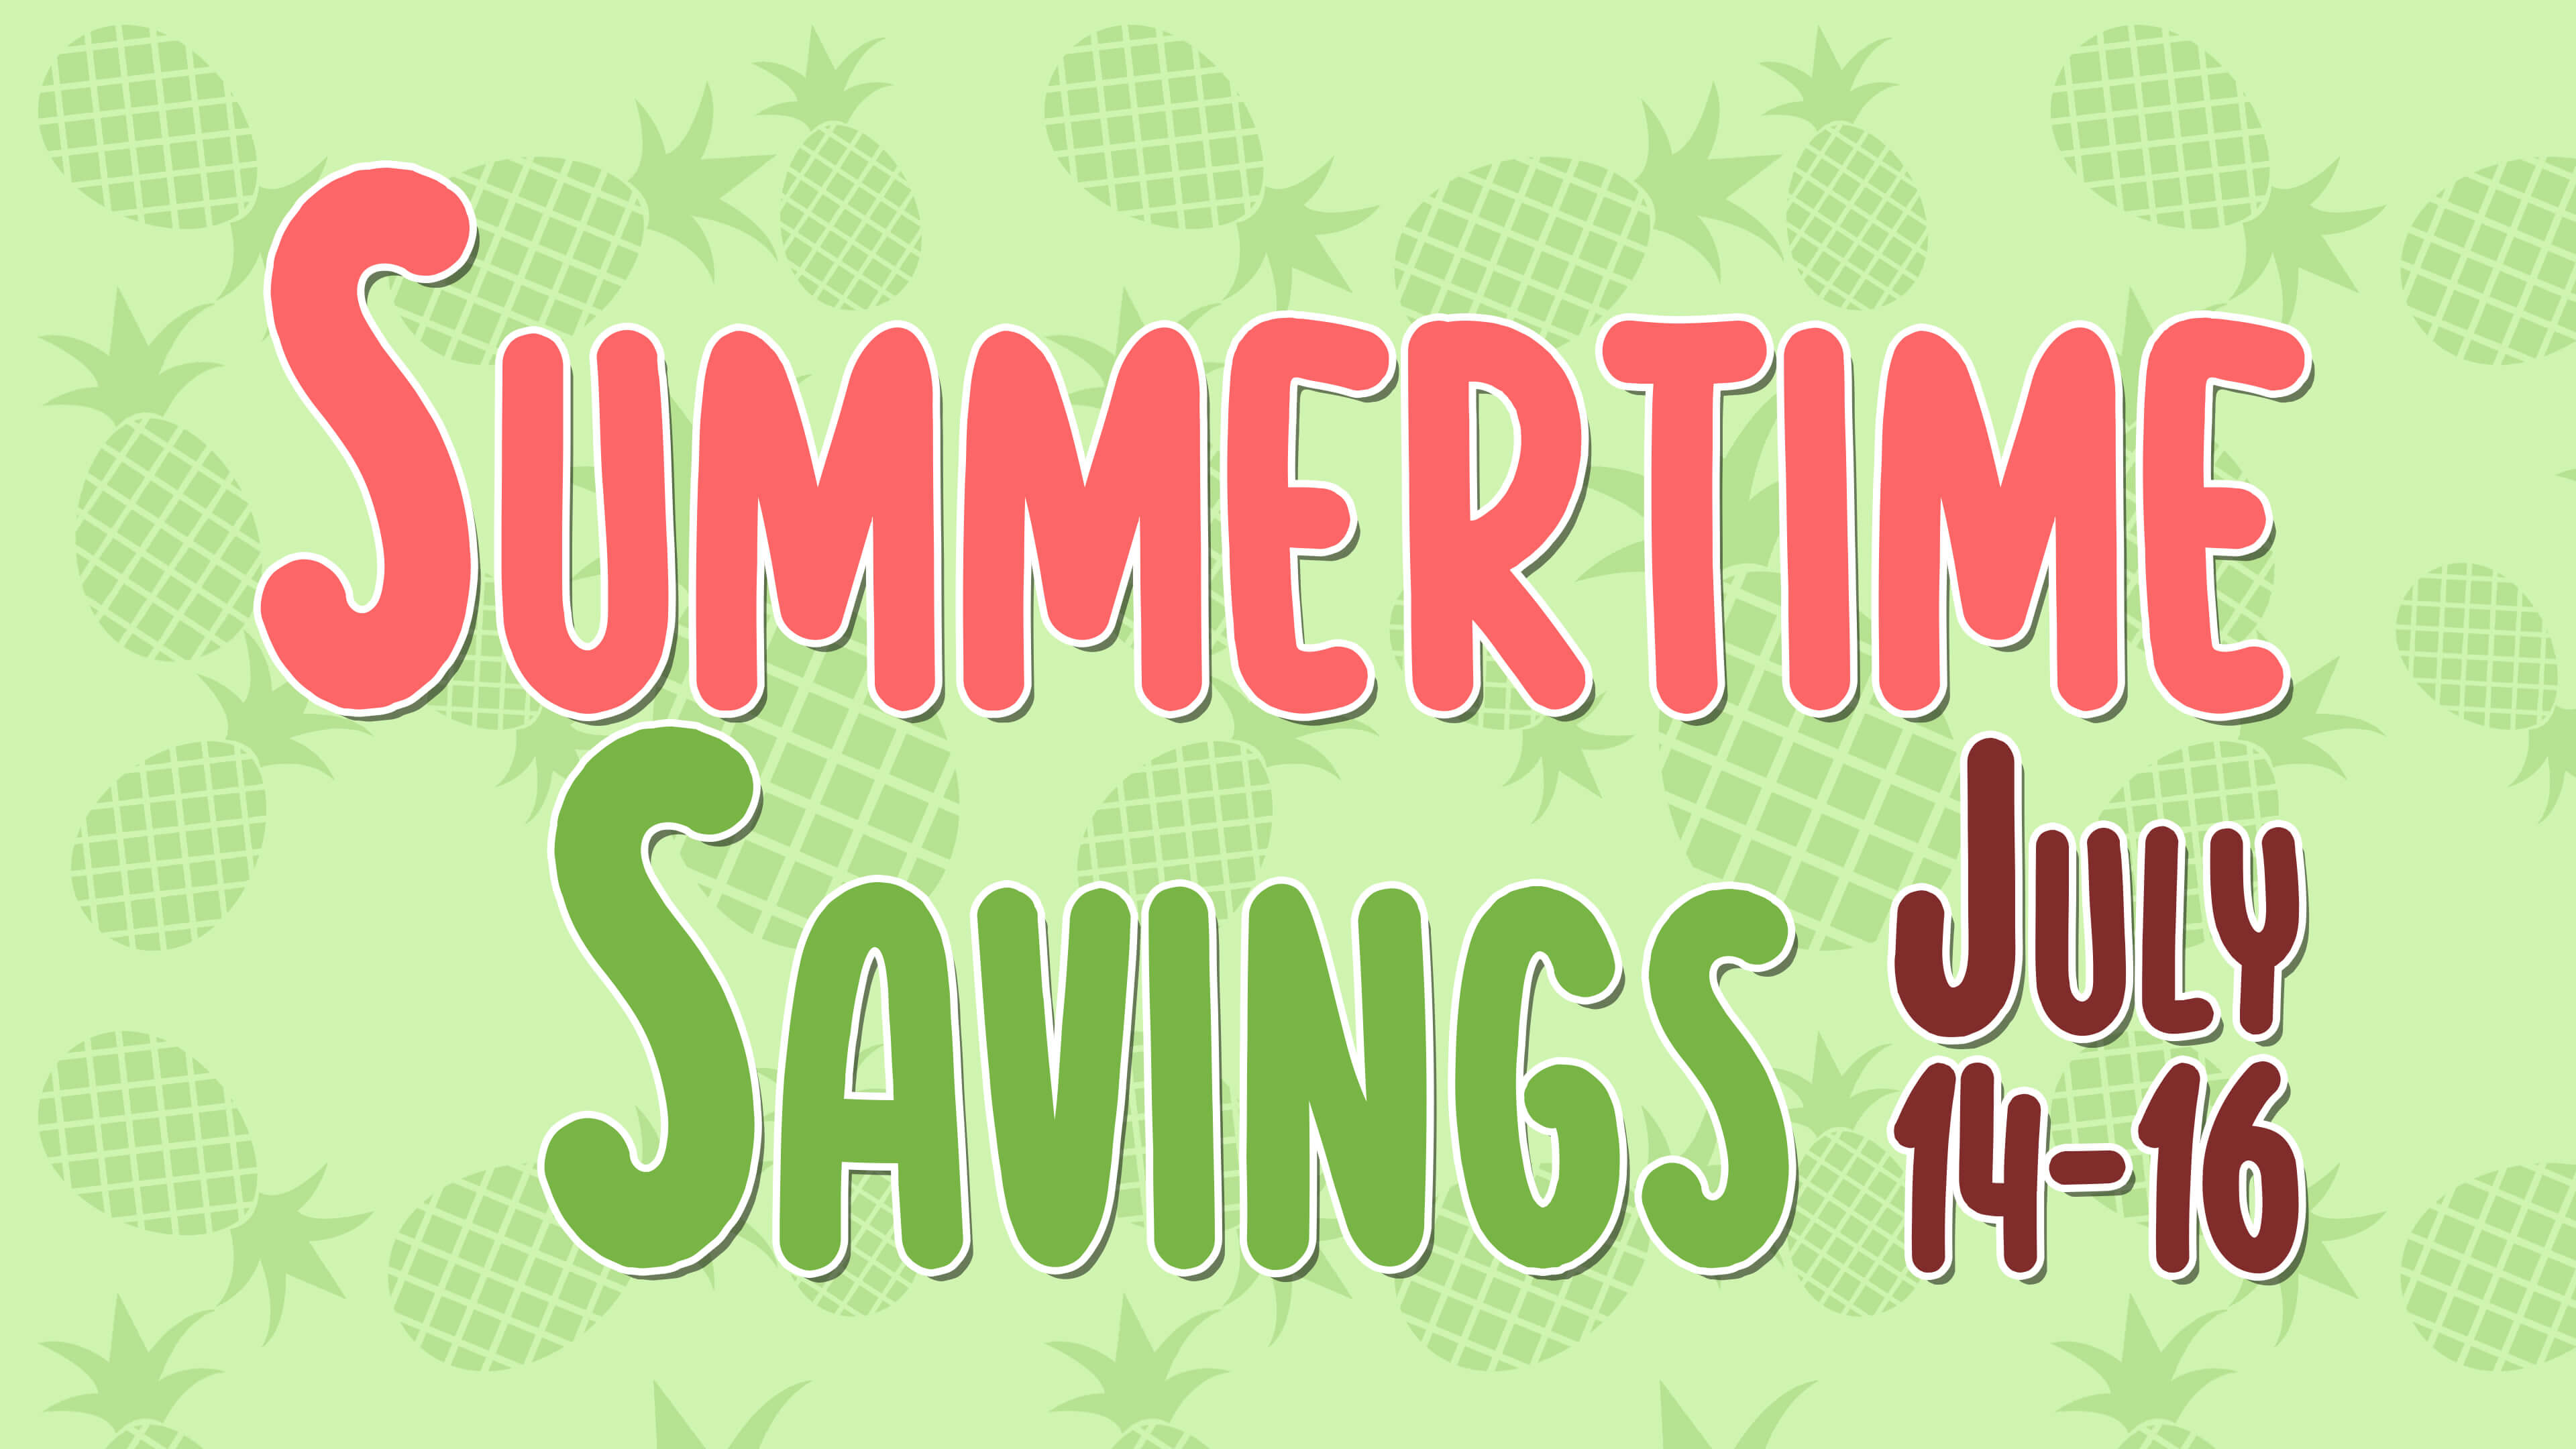 summertime savings july 14-16